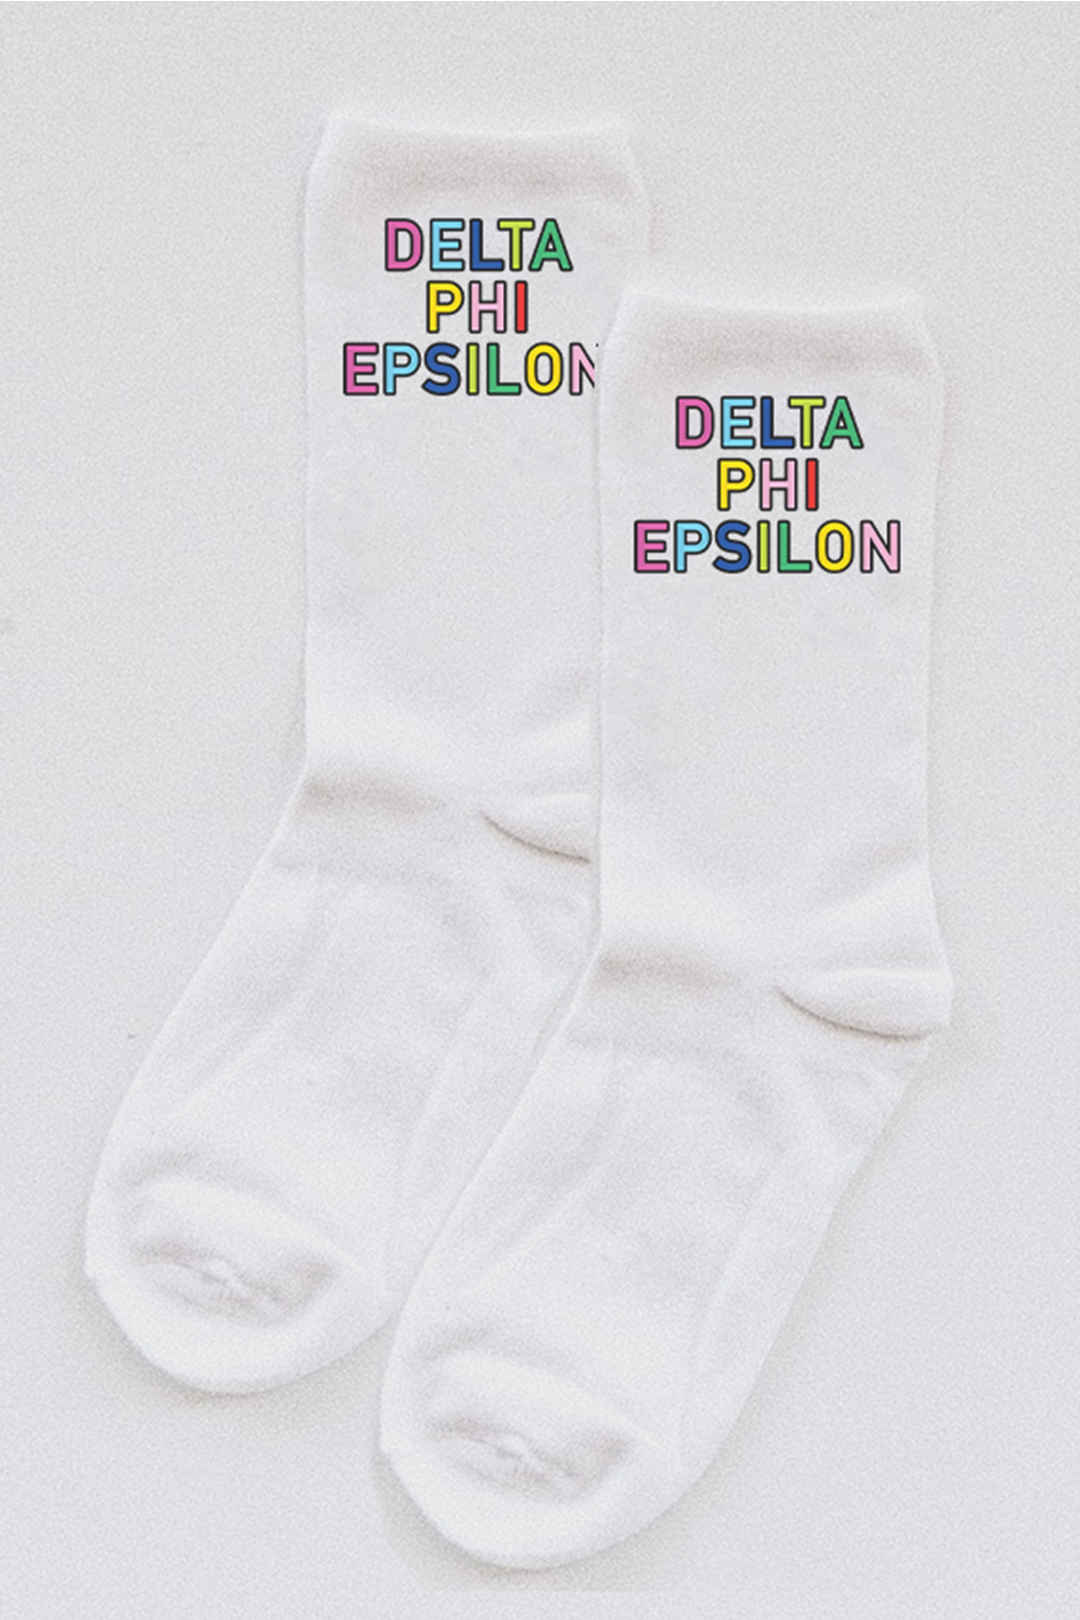 Colorful socks - Delta Phi Epsilon